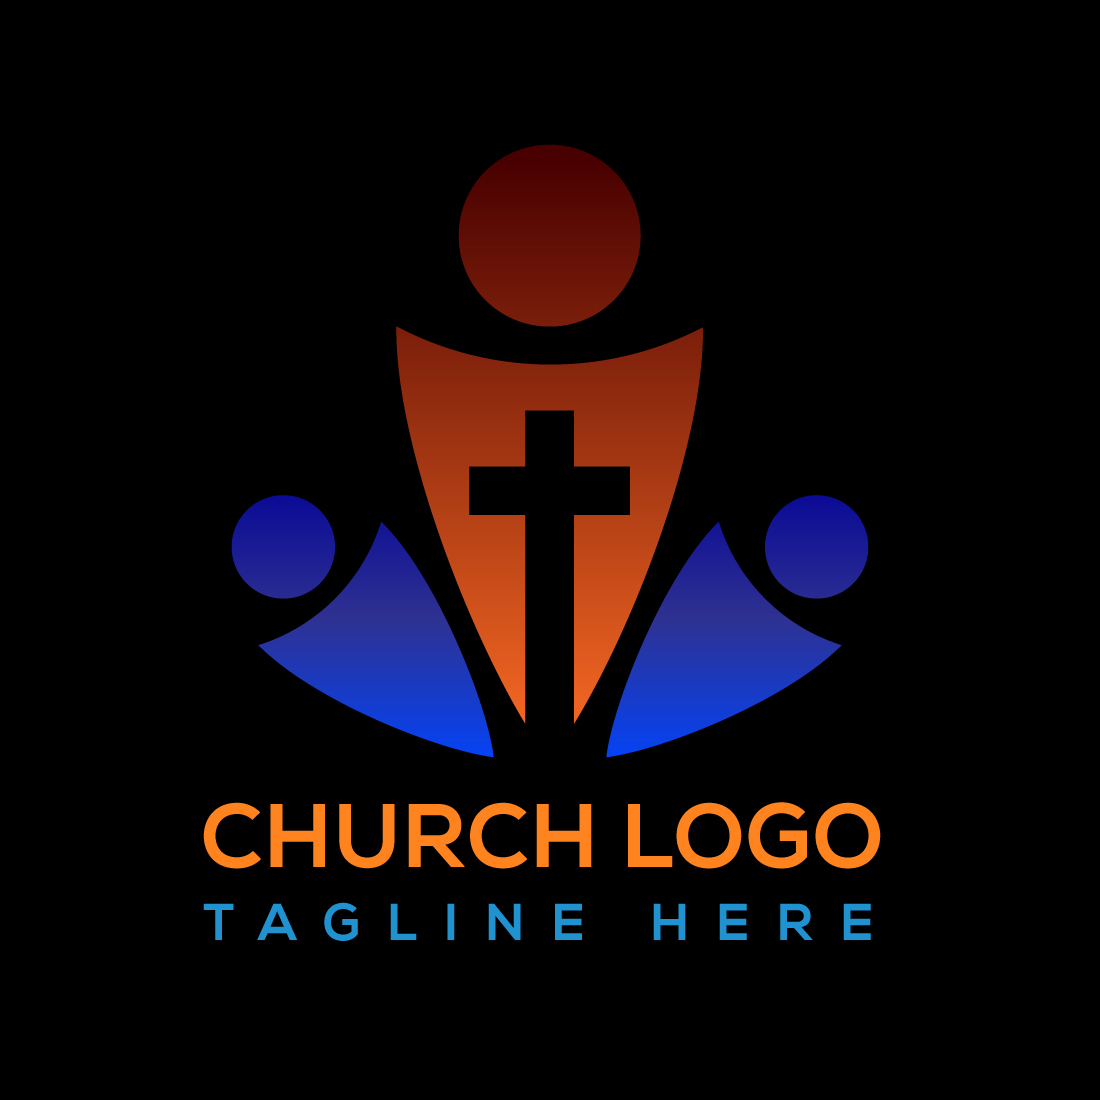 Cross Church Logo Black Template cover image.